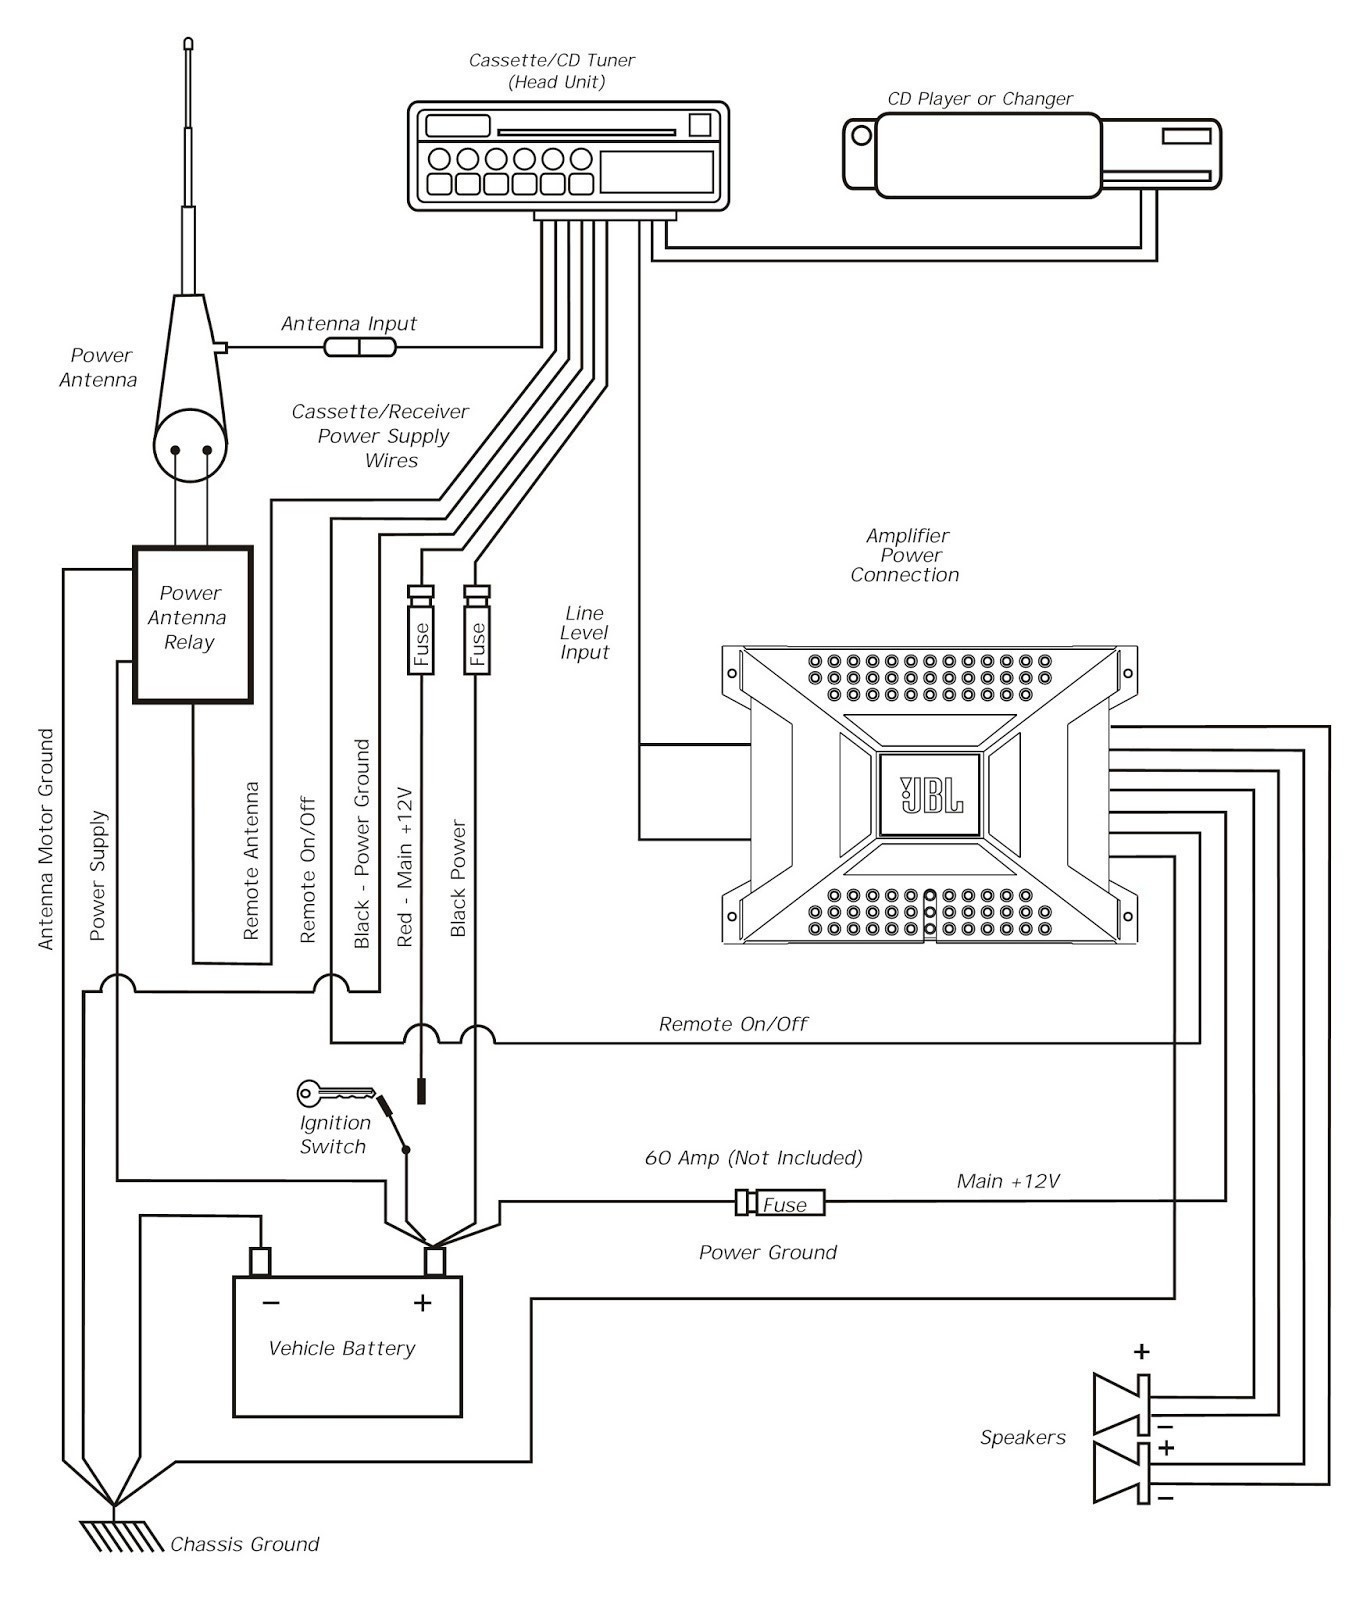 Audi A6 Wiring Diagram Audi Q7 Wiring Diagrams Automotive Wiring Diagrams Of Audi A6 Wiring Diagram